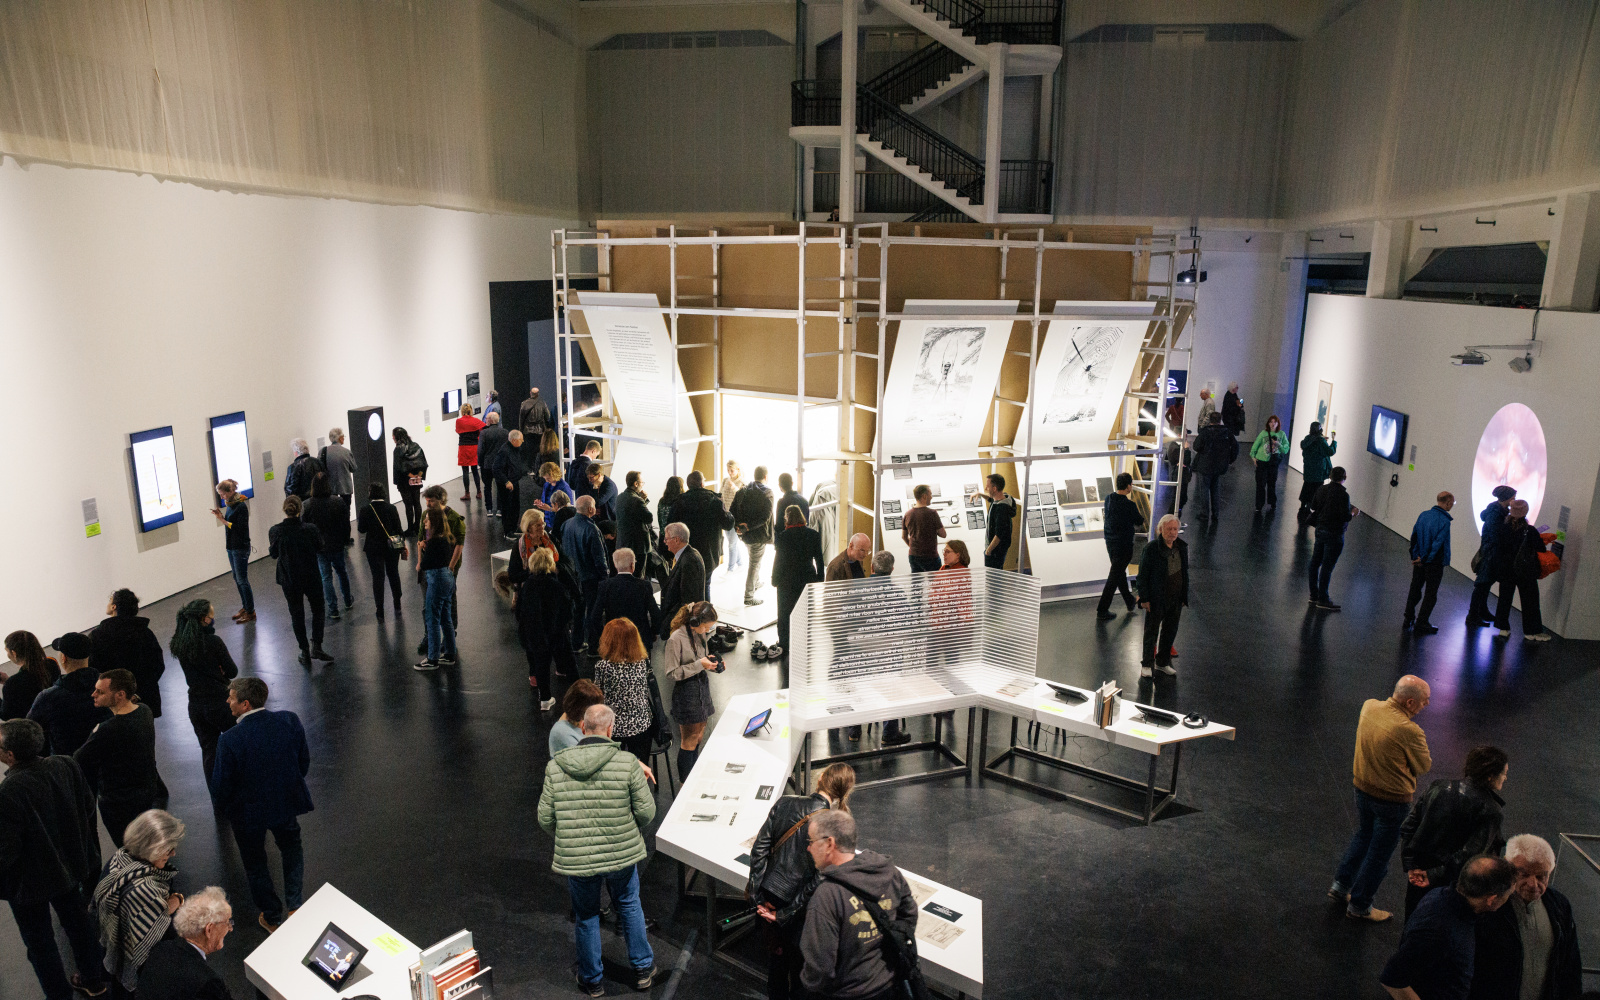 Exhibition view »Renaissance 3.0« at the ZKM | Karlsruhe.